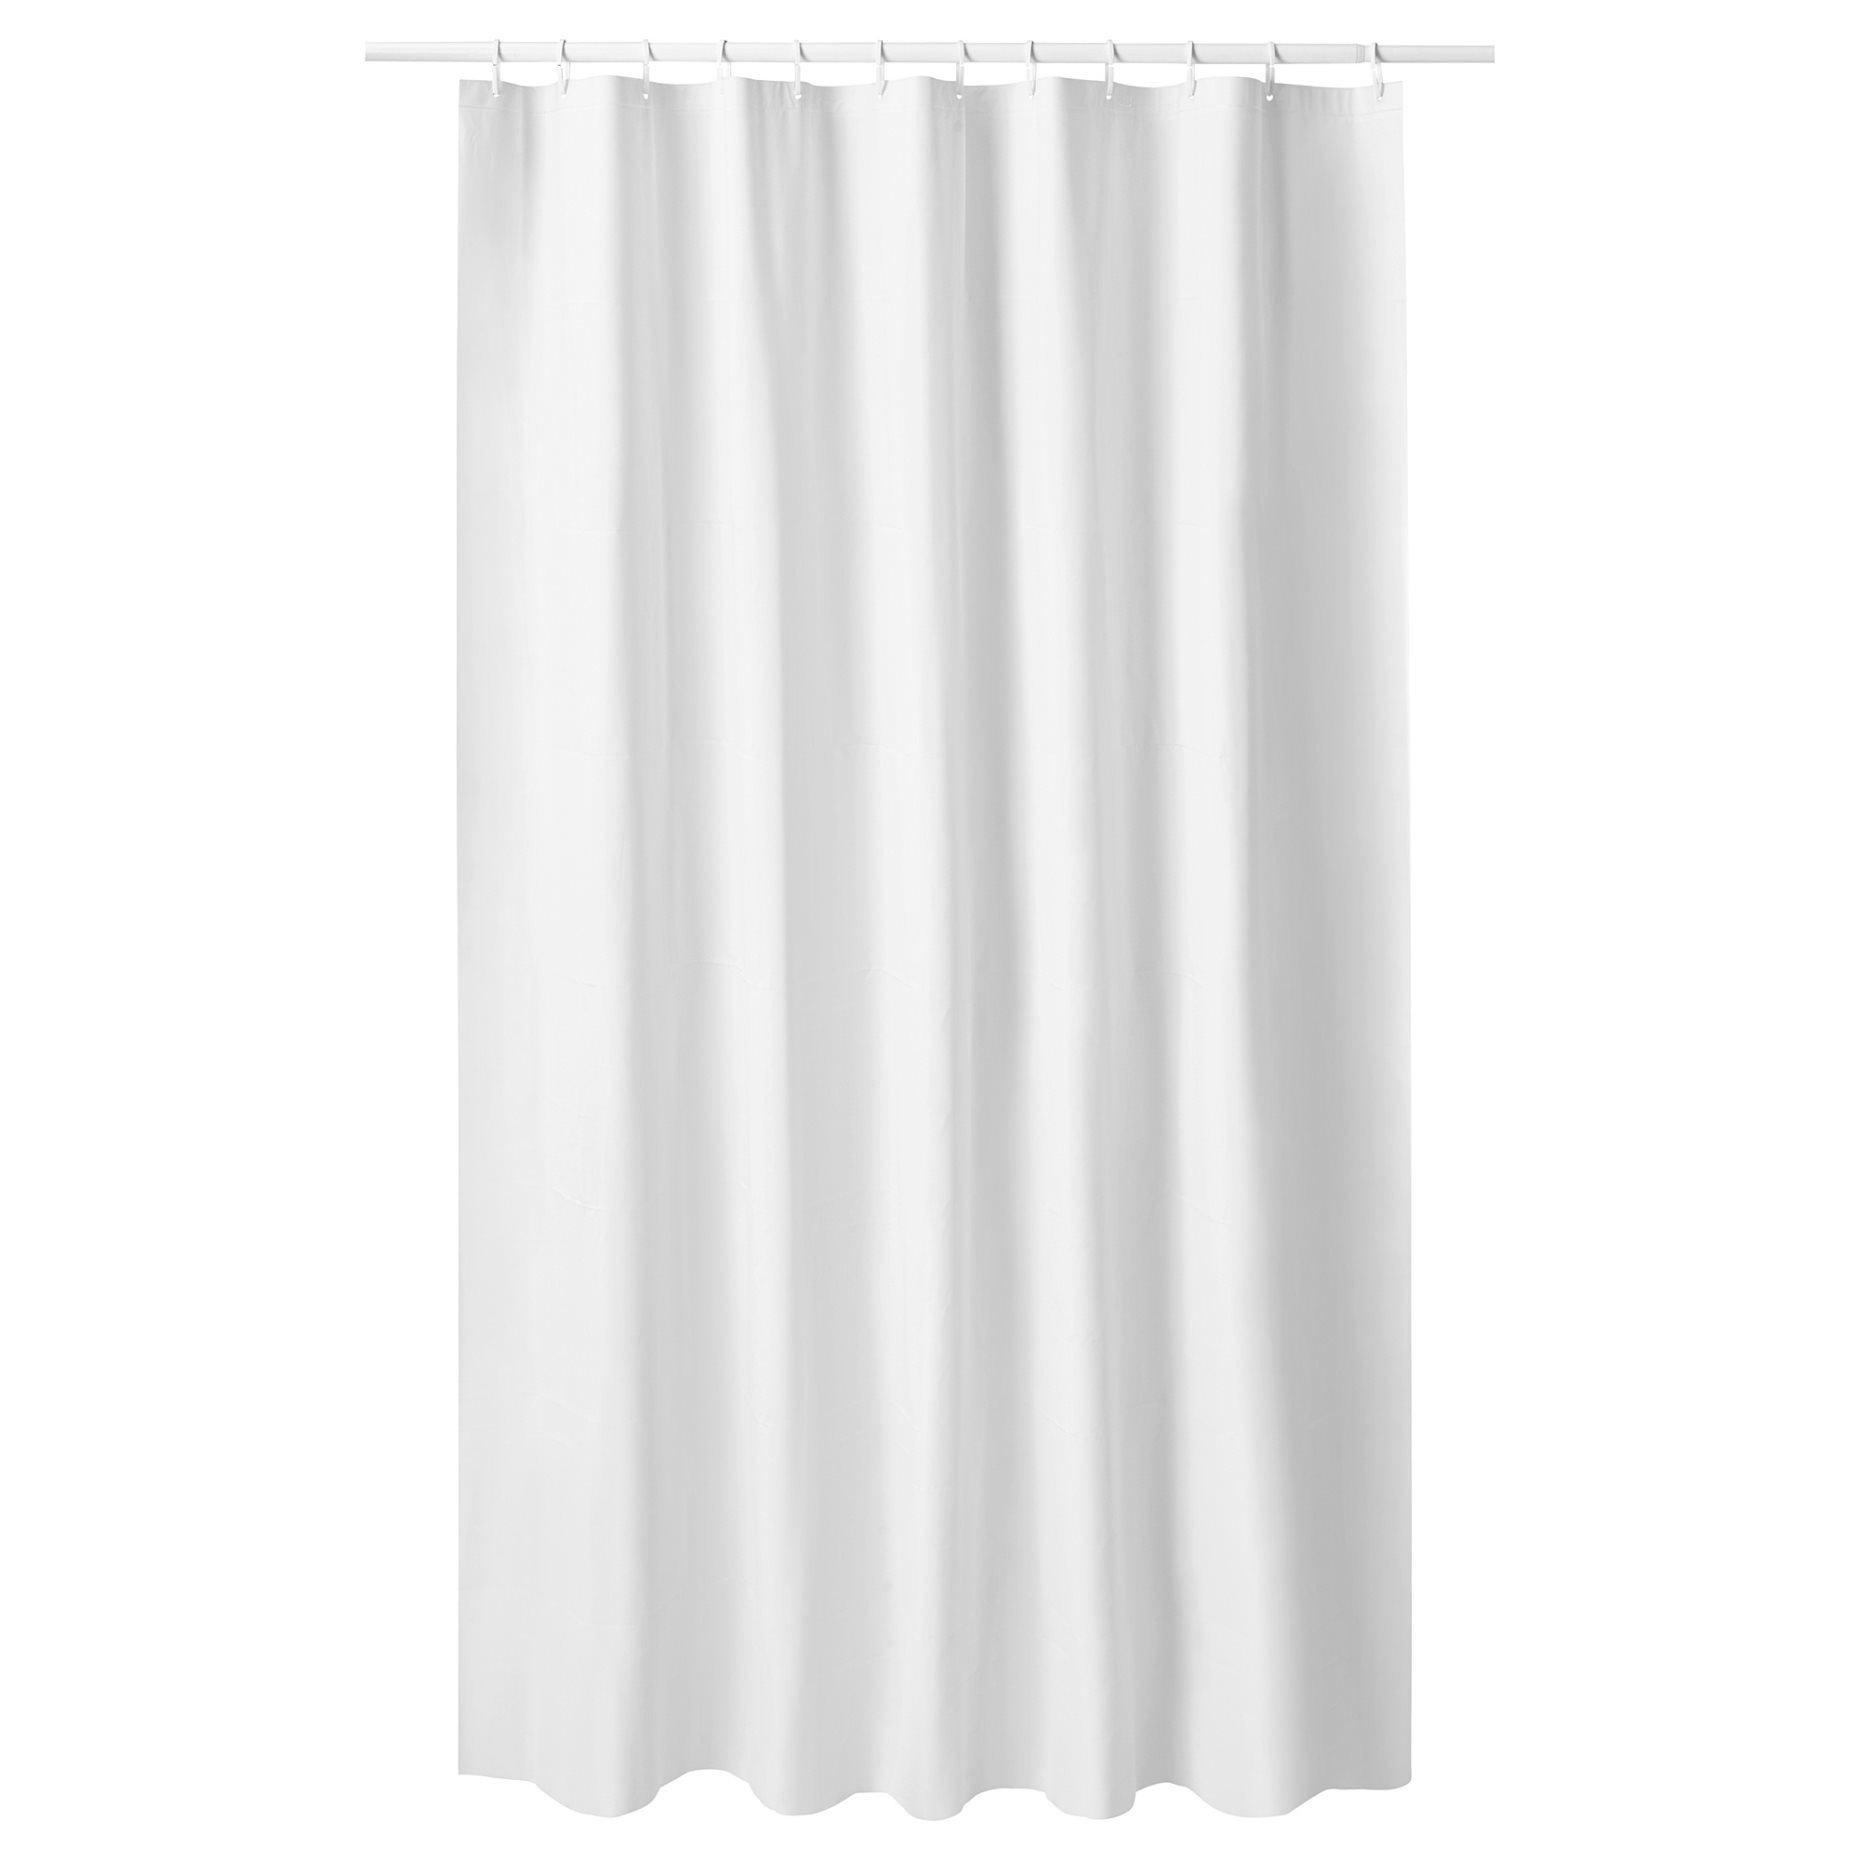 LUDDHAGTORN, shower curtain, 180x200 cm, 905.574.19